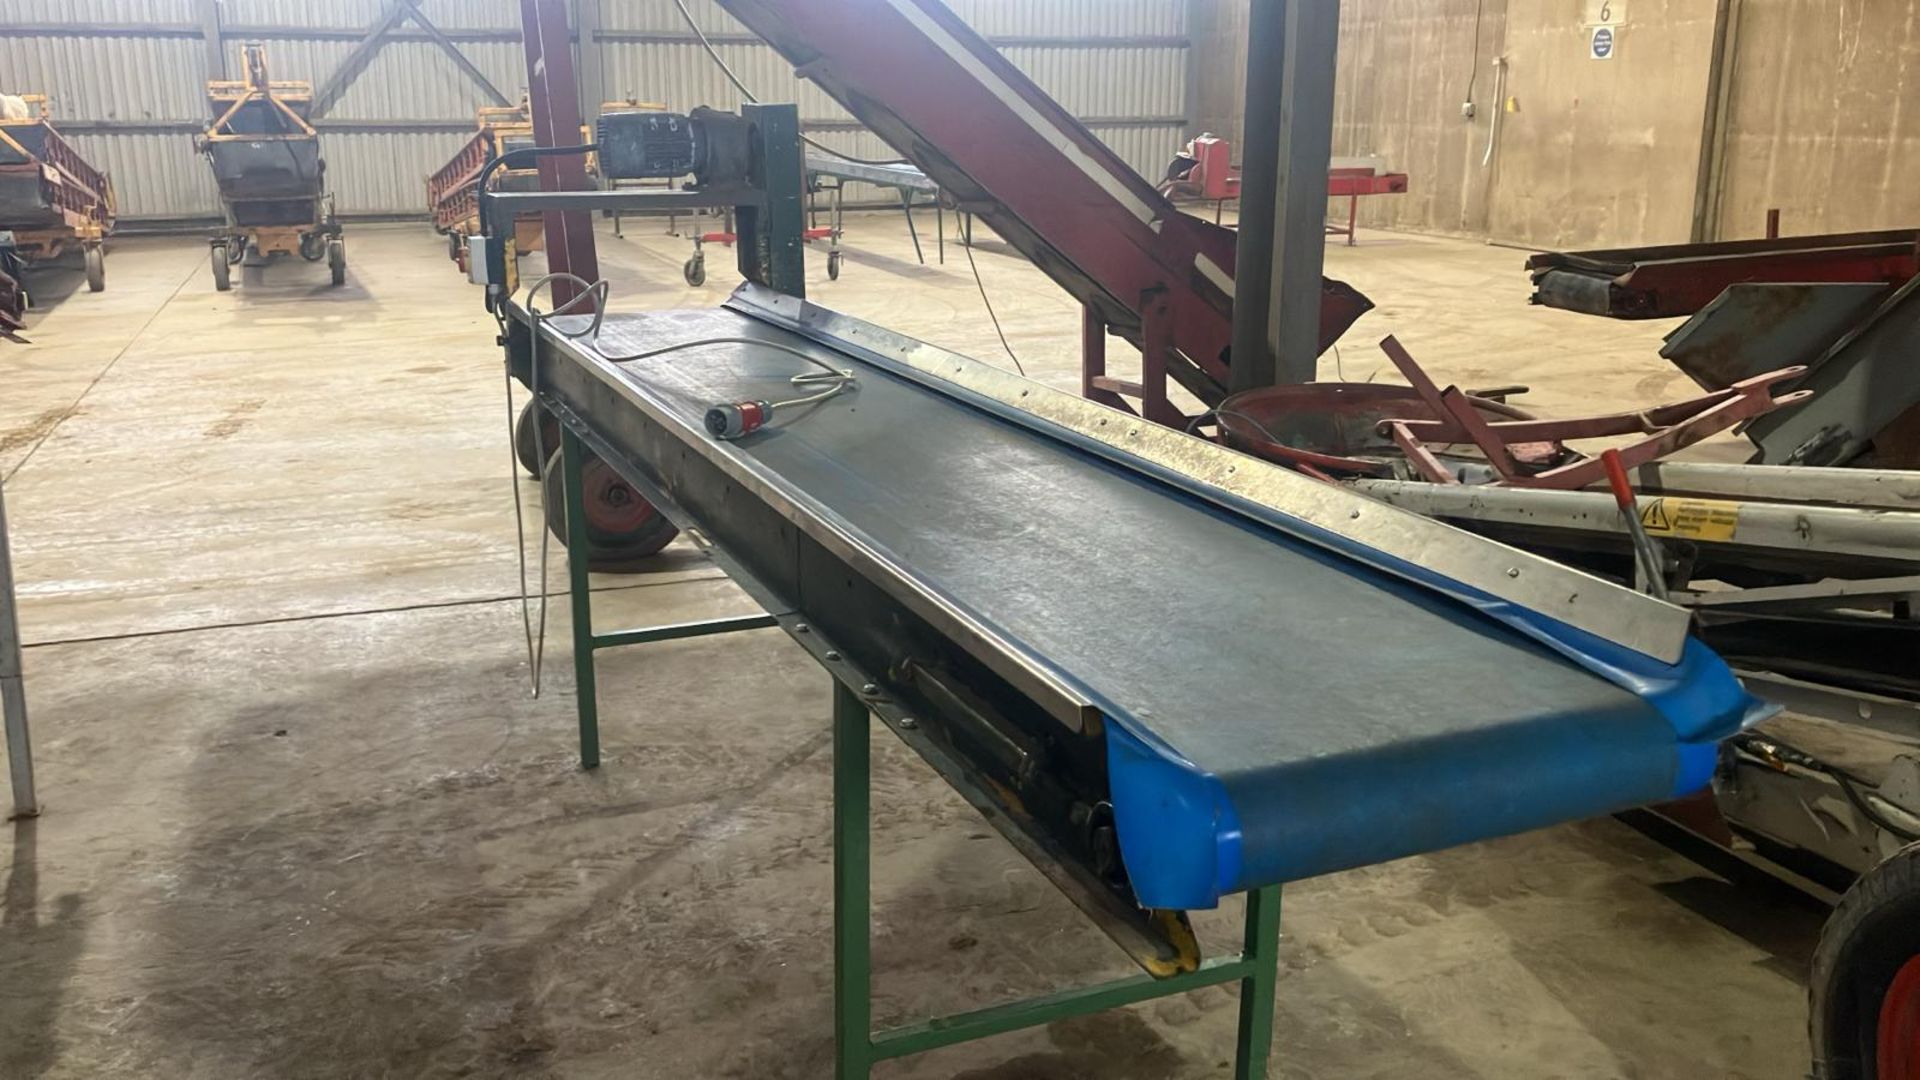 Conveyor 3.5m x 600mm, 3 phase, flat belt, passed PAT test